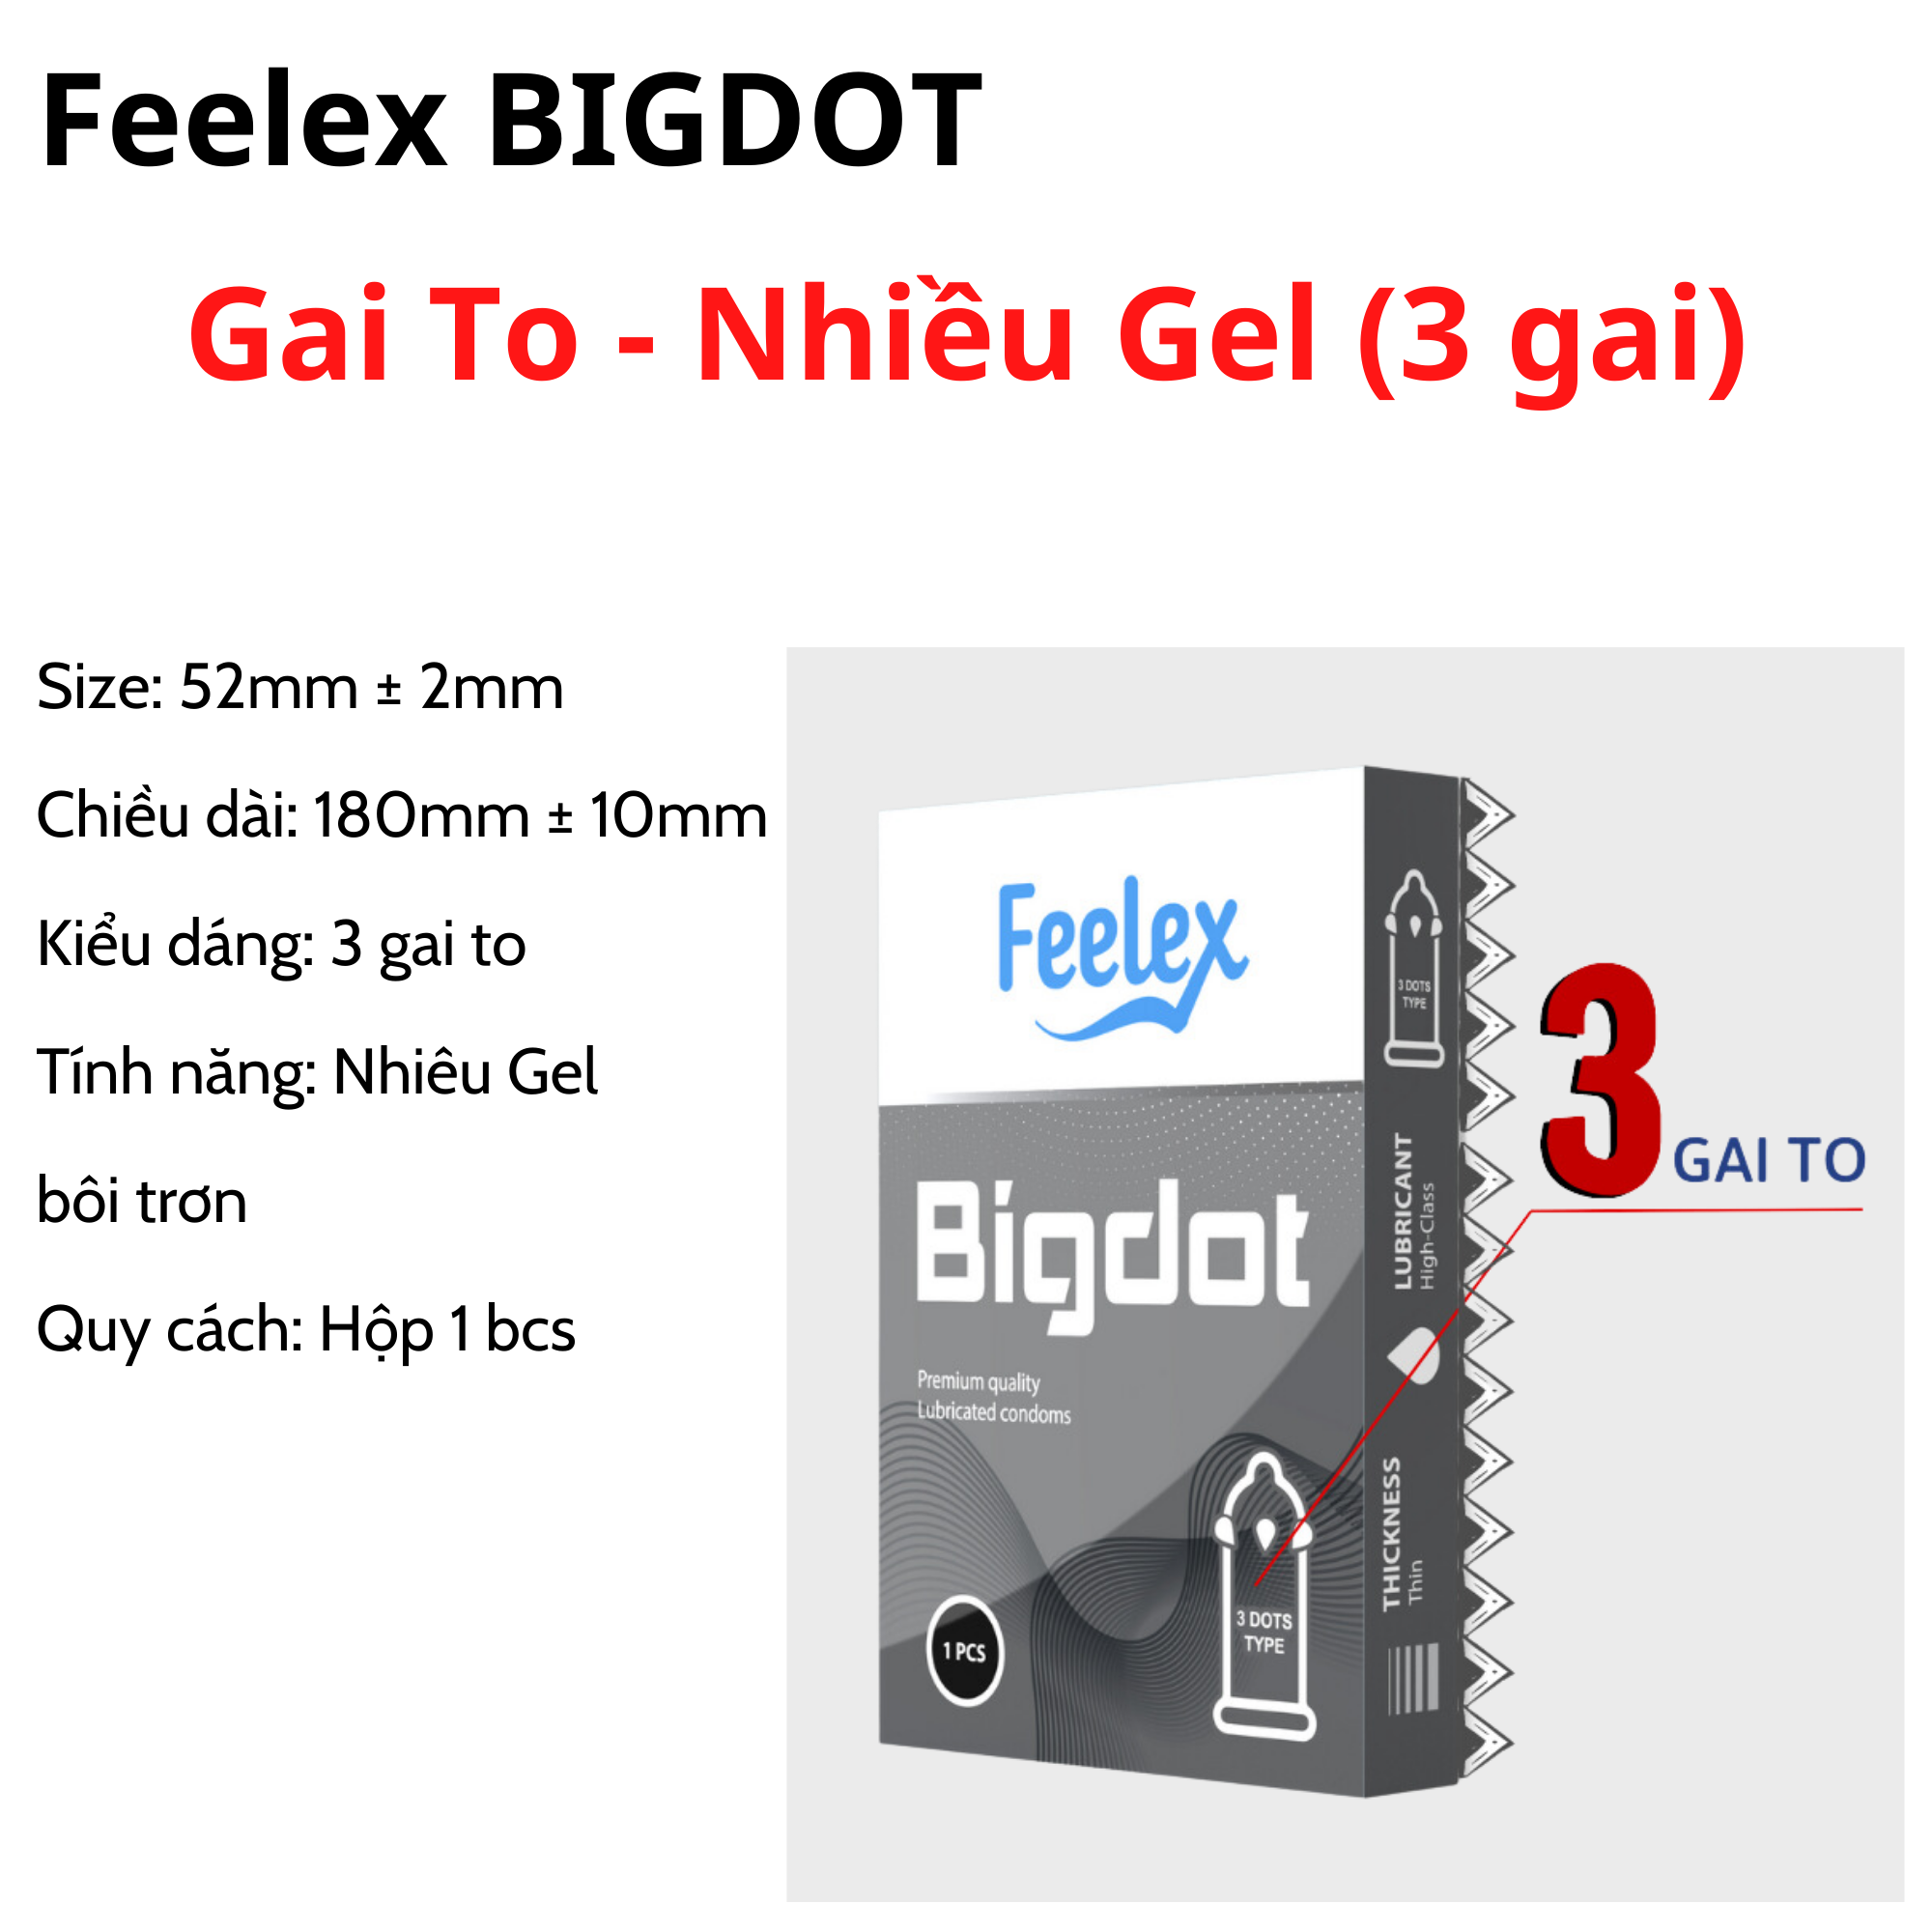 Bao cao su gai to Feelex Bigdot có 3 bi lớn nhiều gel bôi trơn - Hộp 1 chiếc